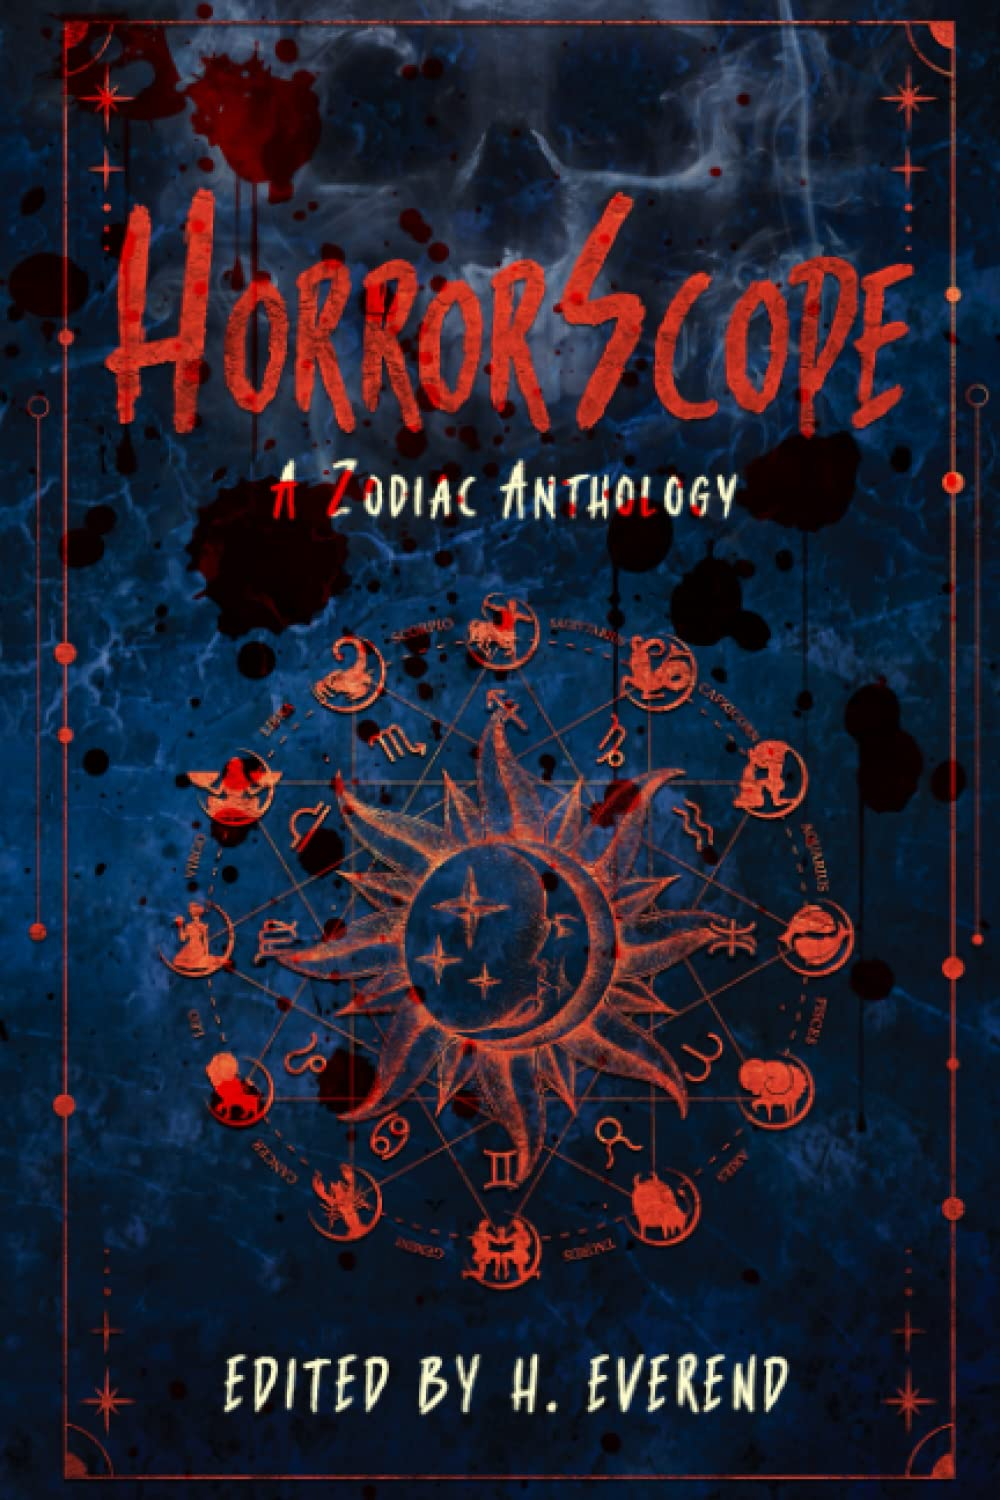 cover of horrorscope